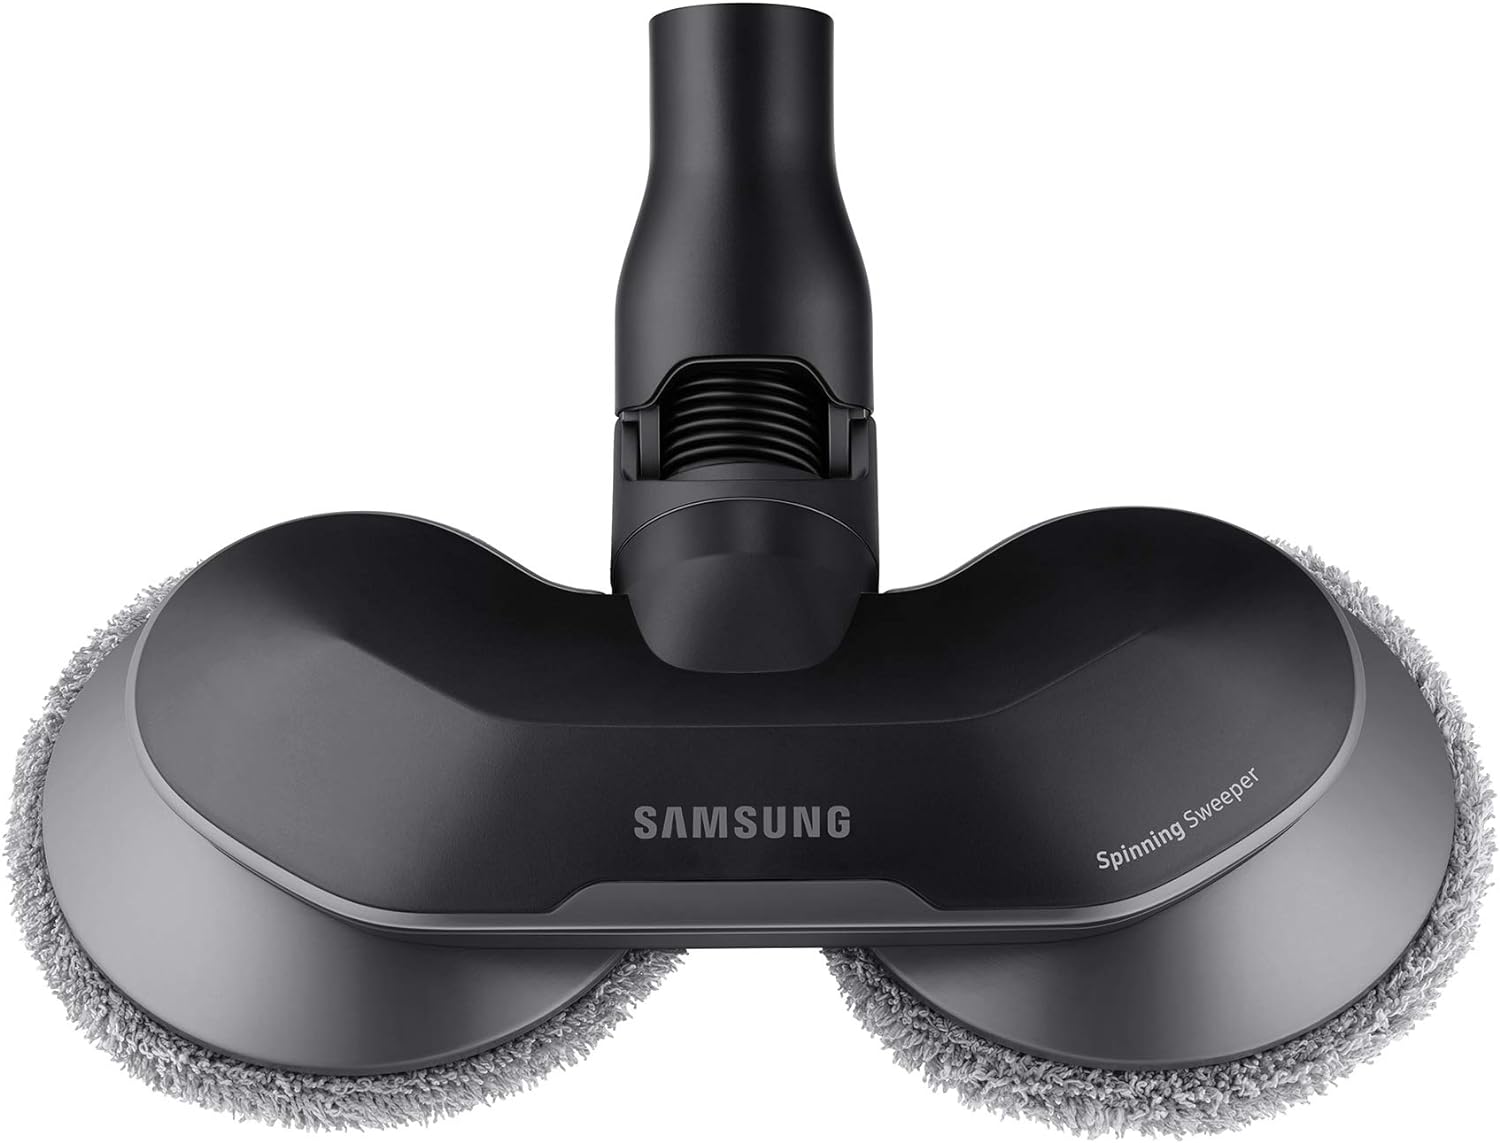 Samsung Spinning Sweeper Mop Head for Jet 90/Jet 75 - Black